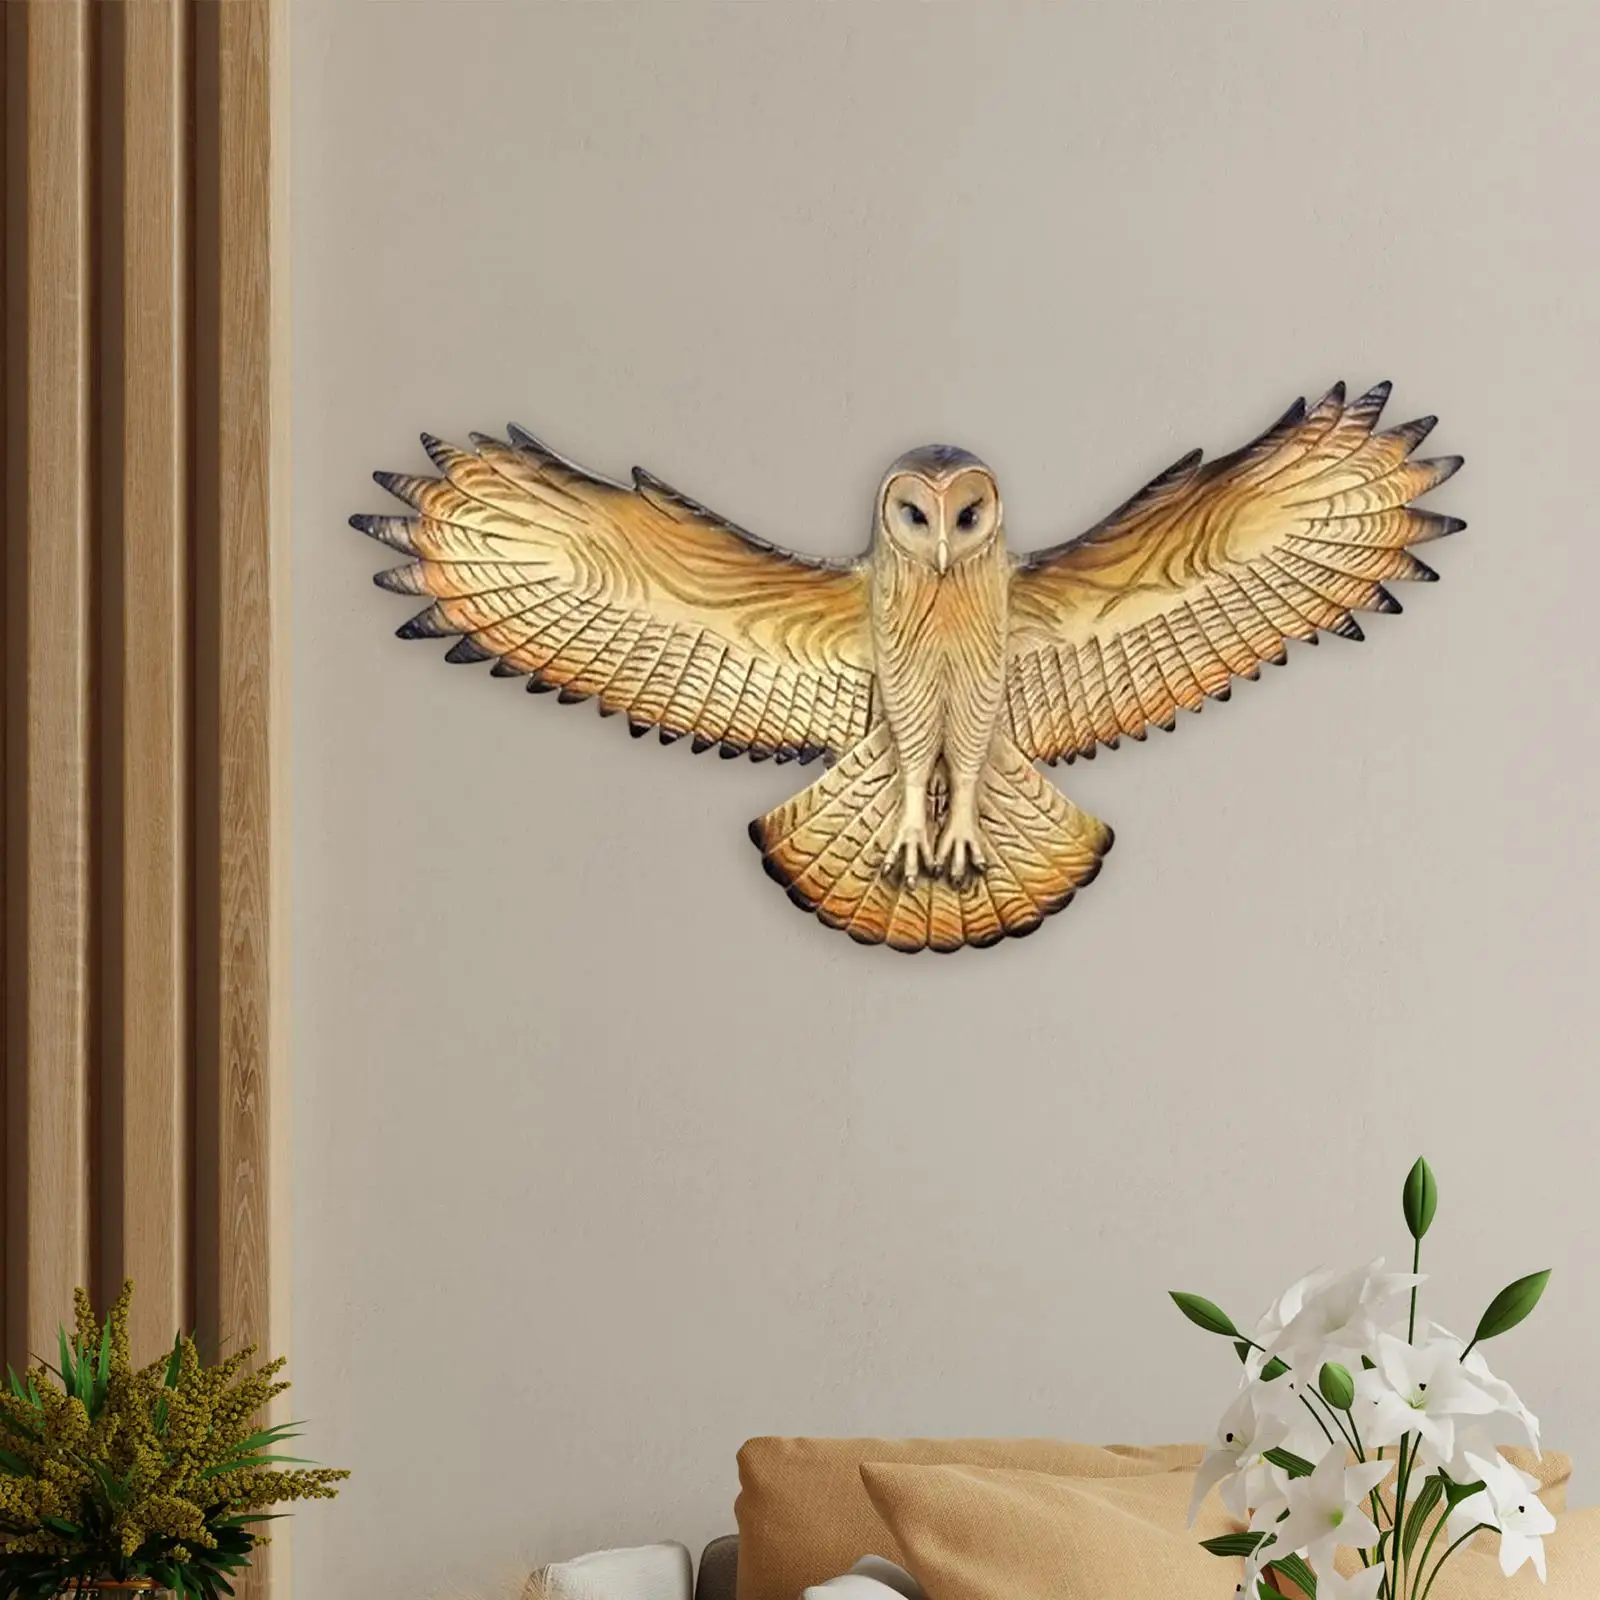 Owl Wall Decor Creative Artwork Wall Hanging Crafts Ornament